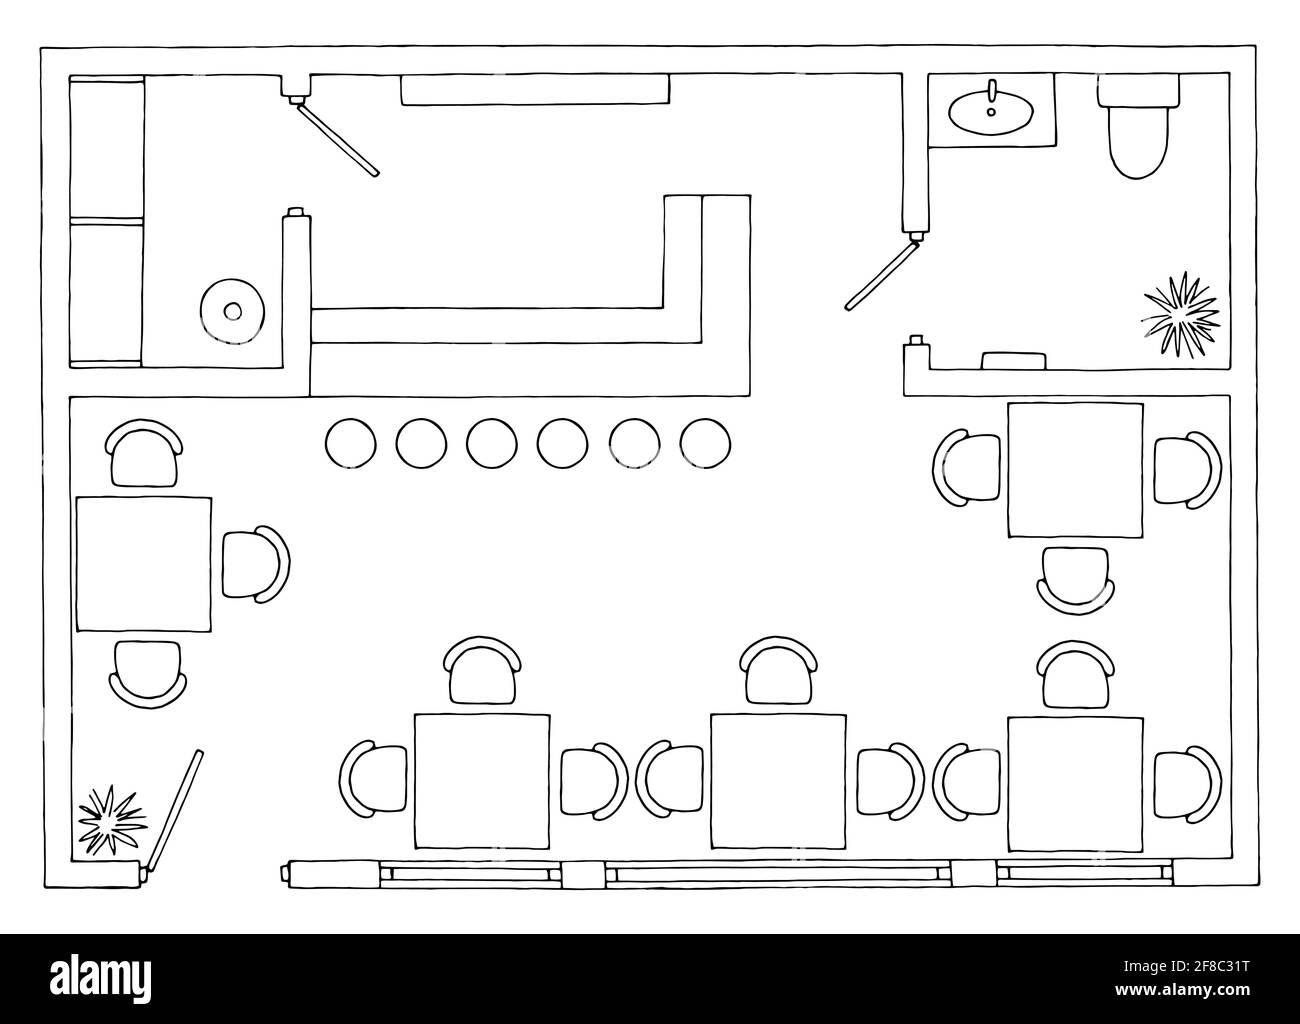 Cafe plan architecture floor interior furniture graphic black white sketch illustration vector Stock Vector